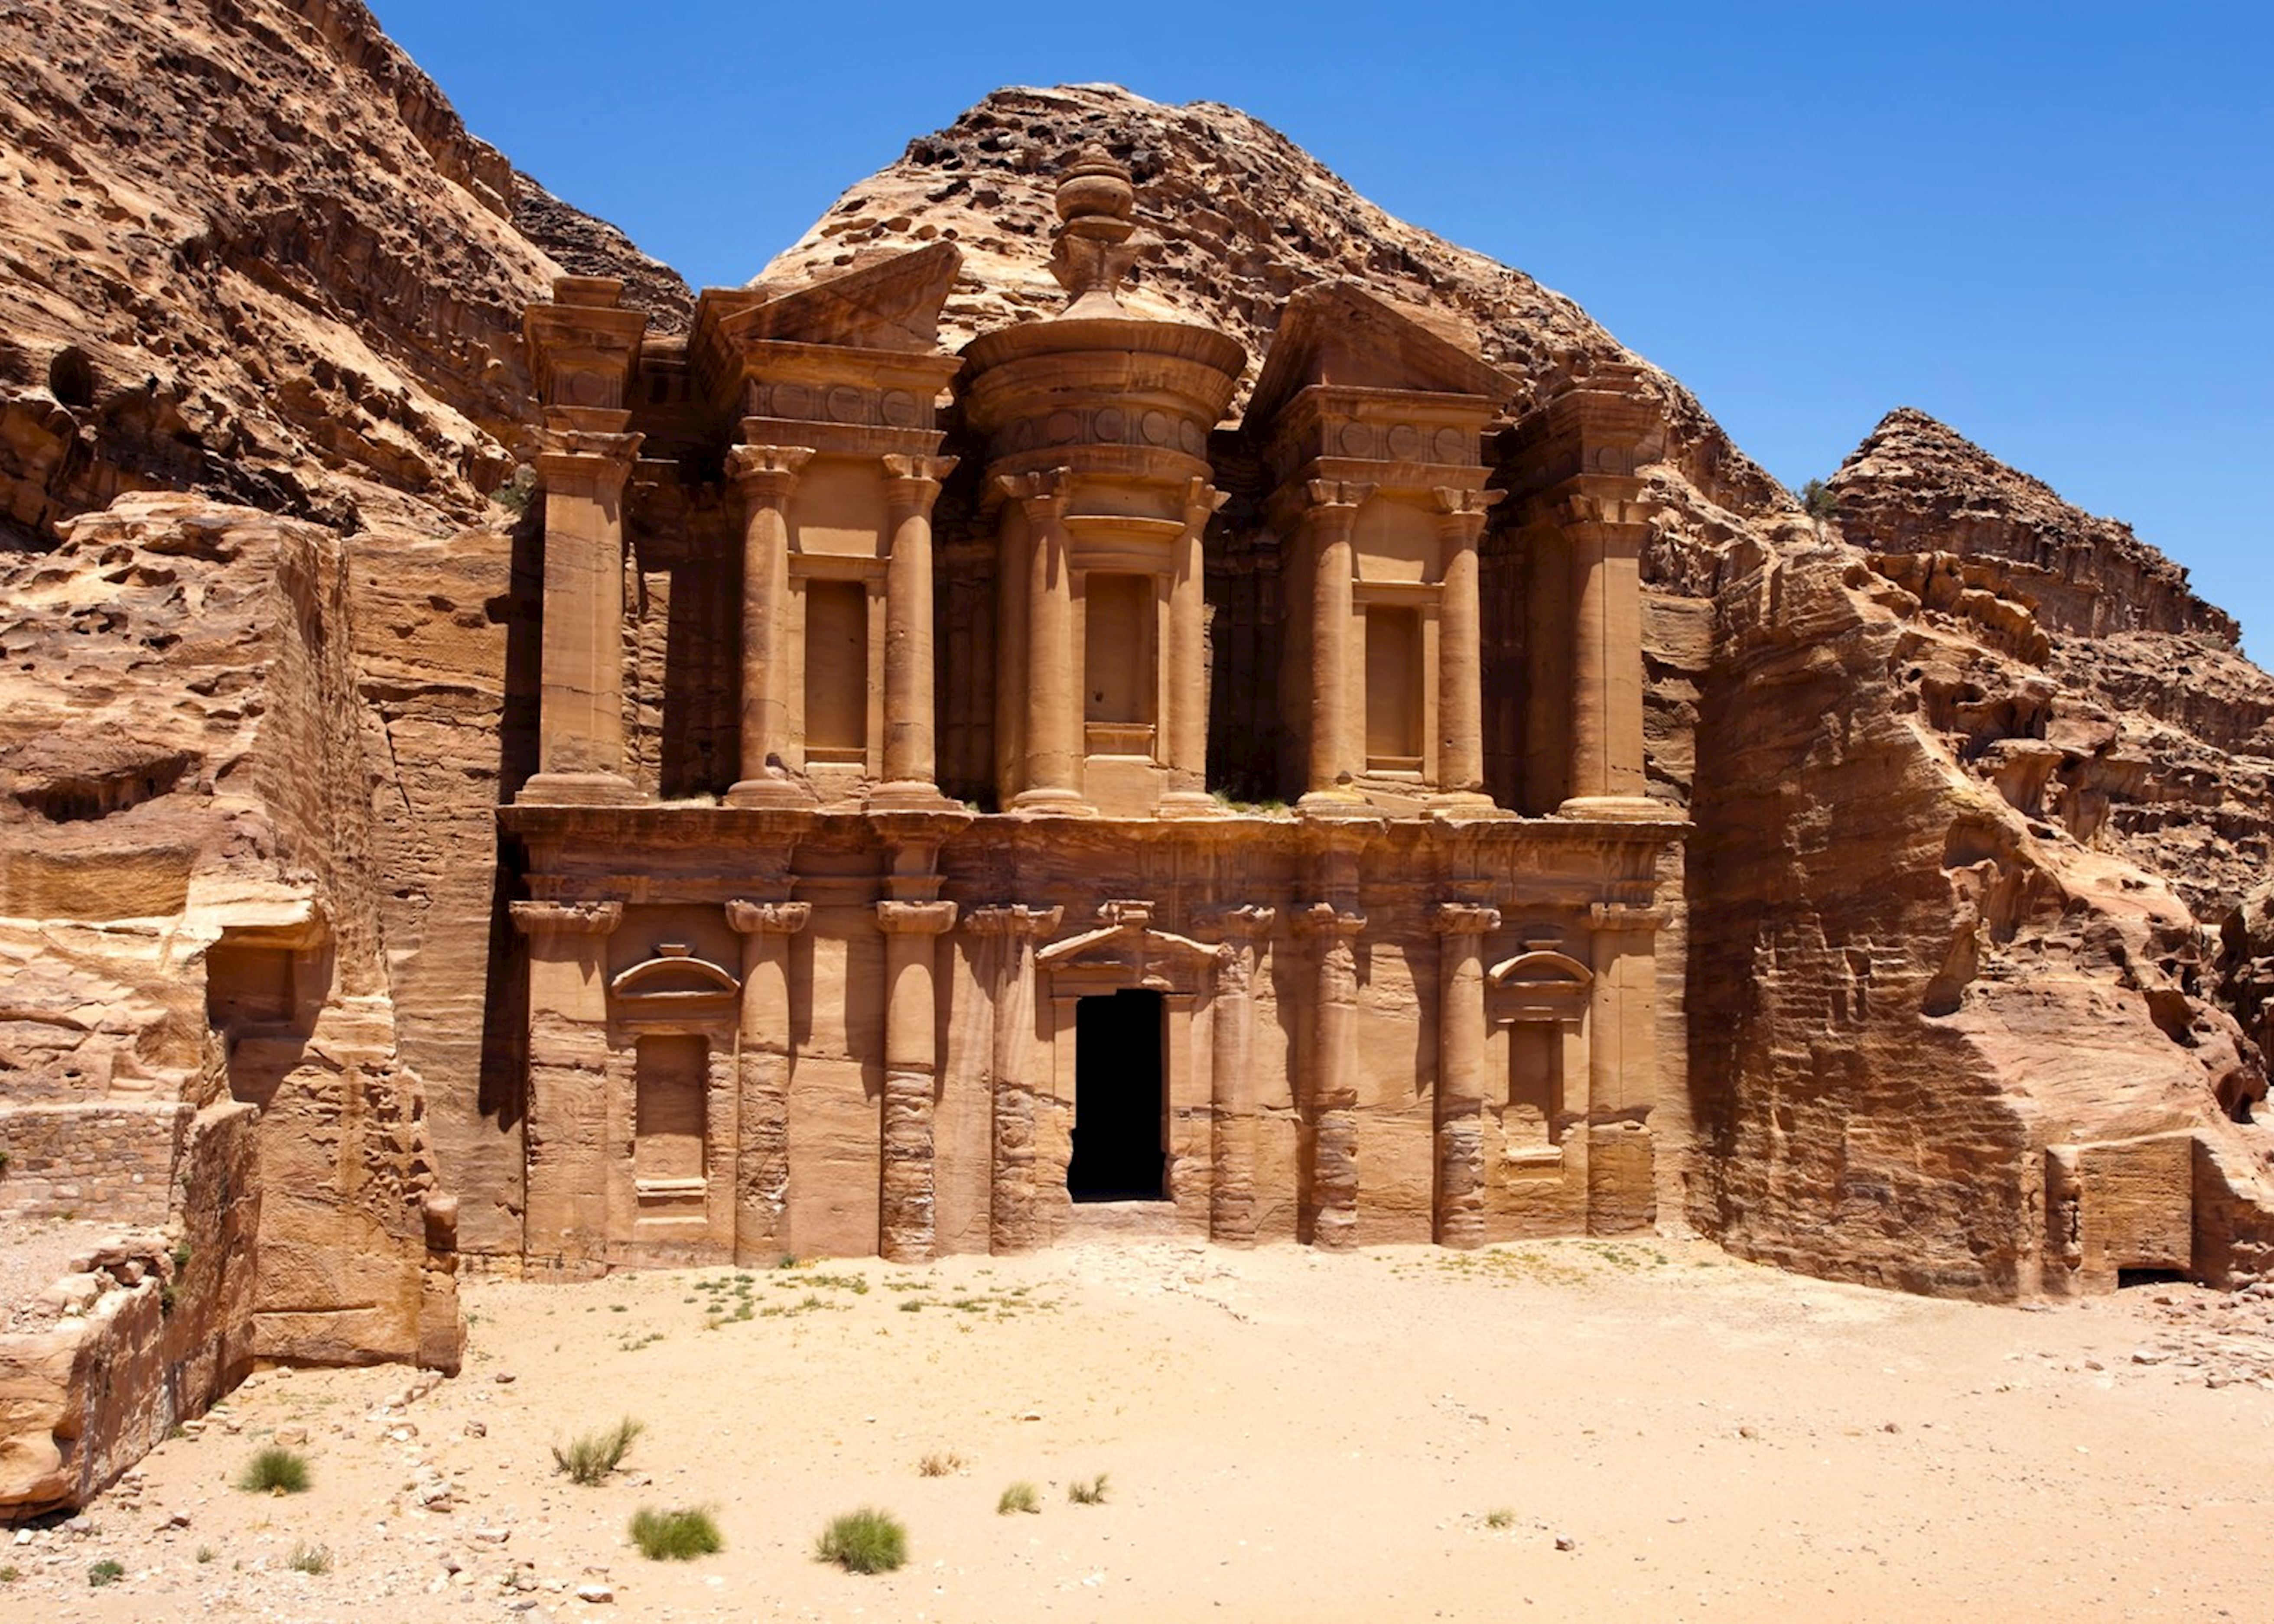 bjerg Begivenhed Tolkning Visit Petra on a trip to Jordan | Audley Travel